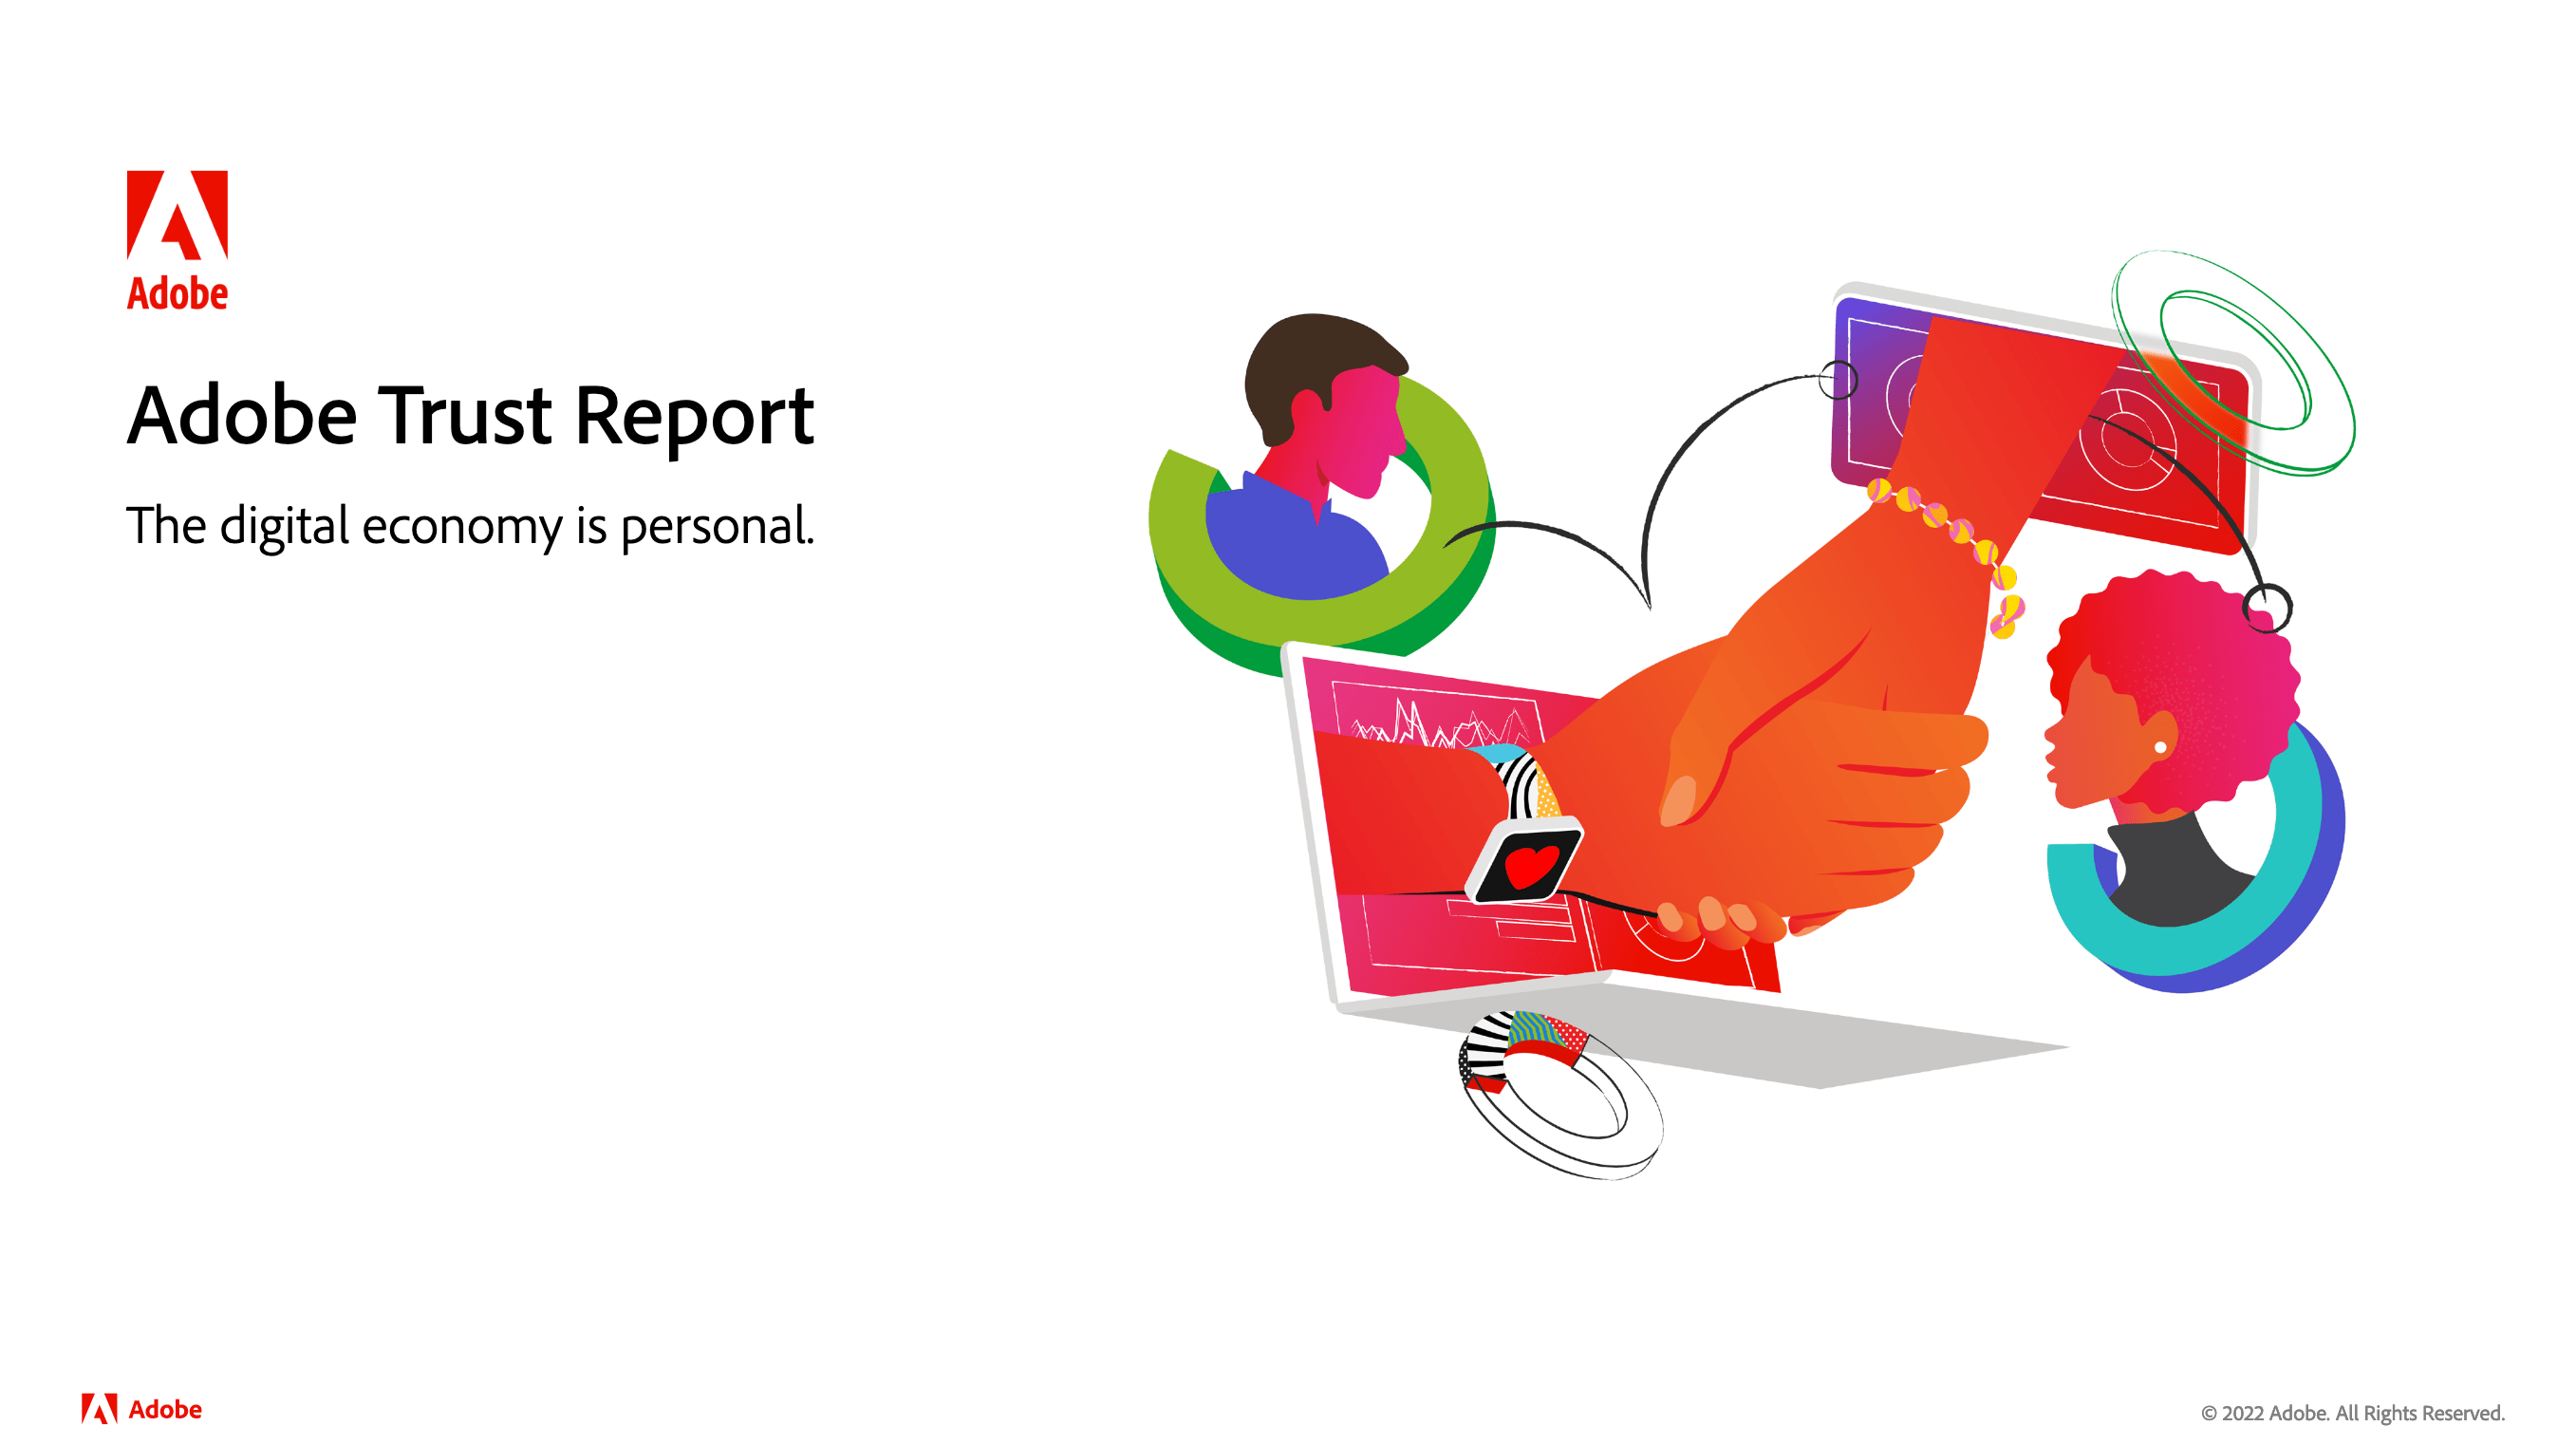 Adobe Trust Report - 2022 Adobe Trust Report